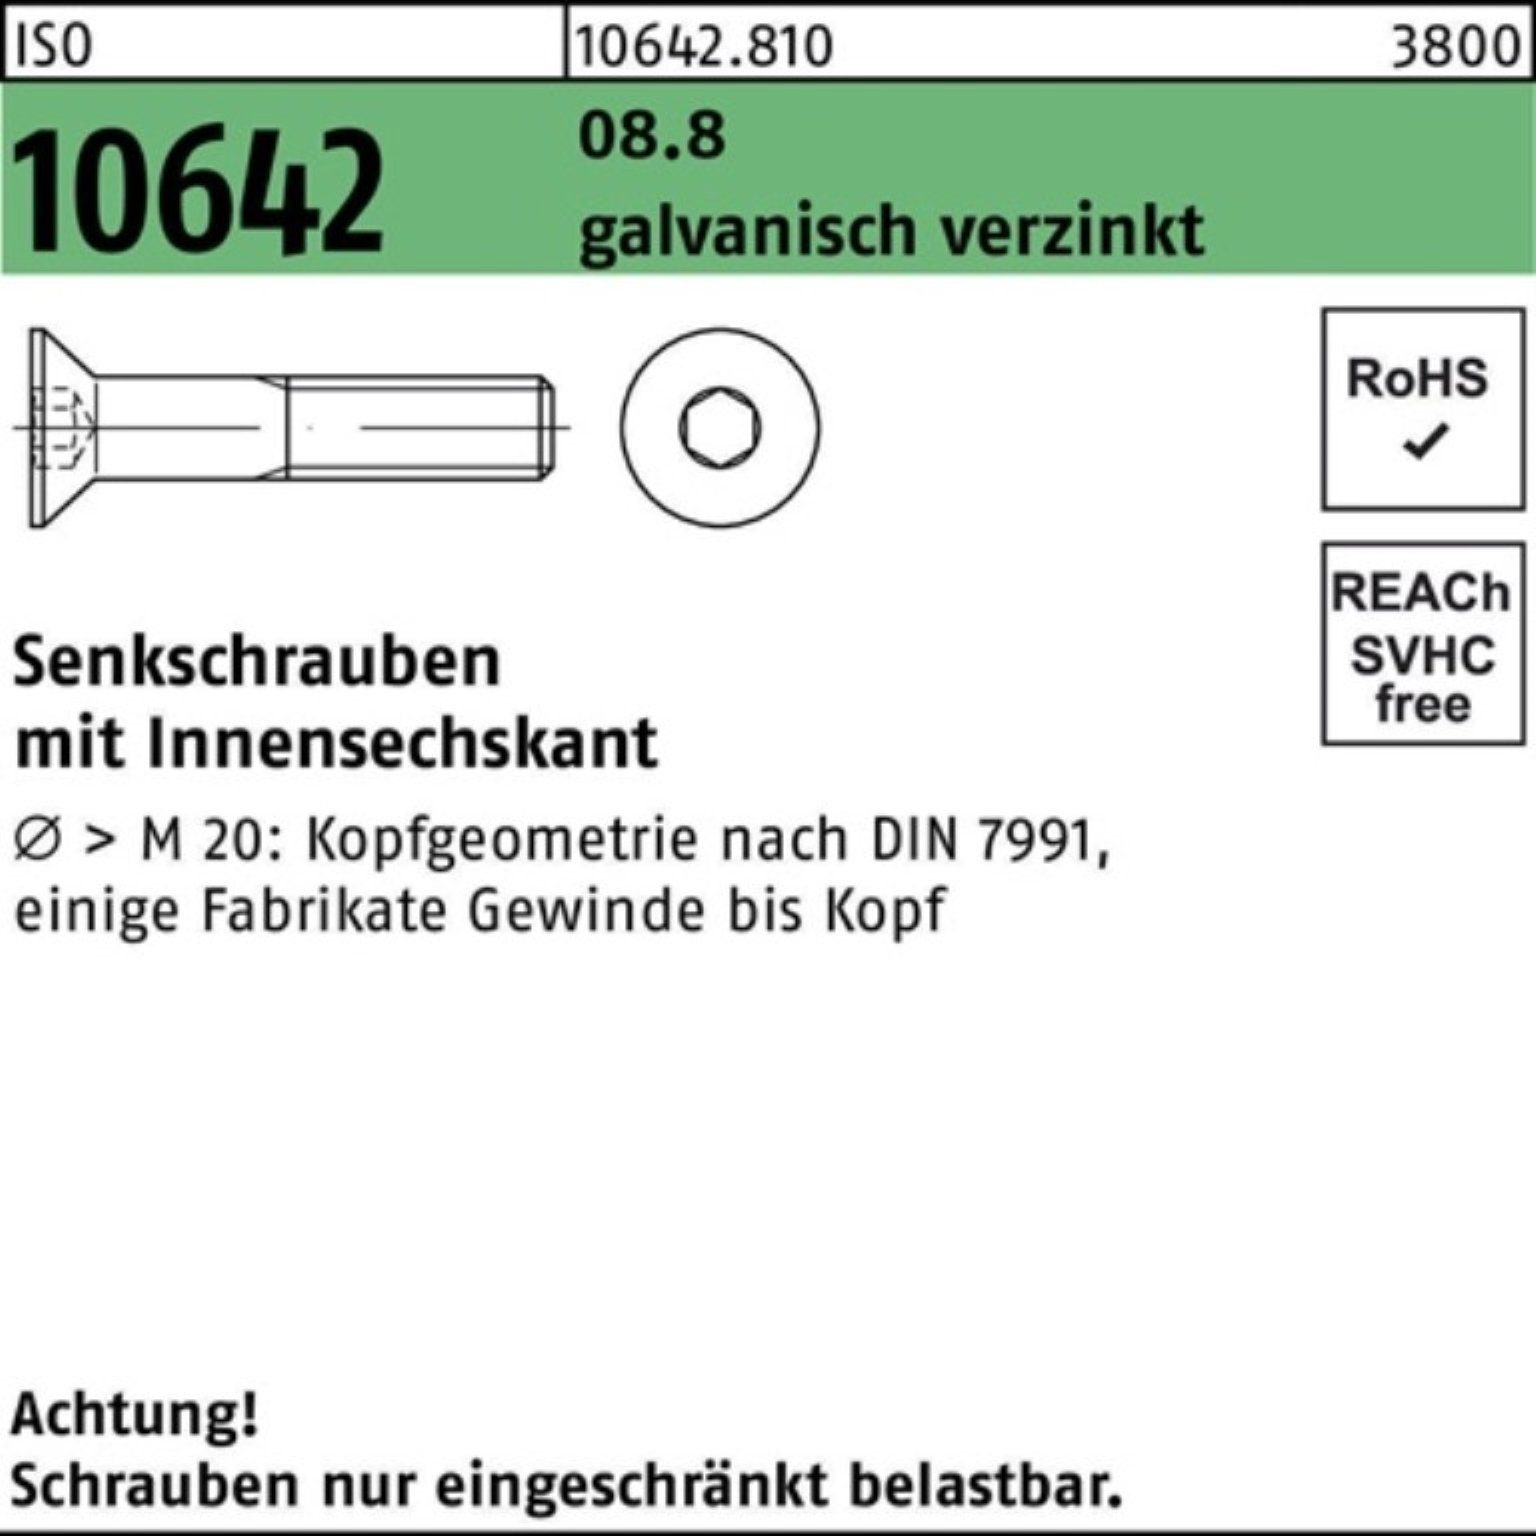 Reyher Senkschraube 100er galv.verz. 8.8 55 M10x 100 Innen-6kt 10642 ISO Senkschraube Pack